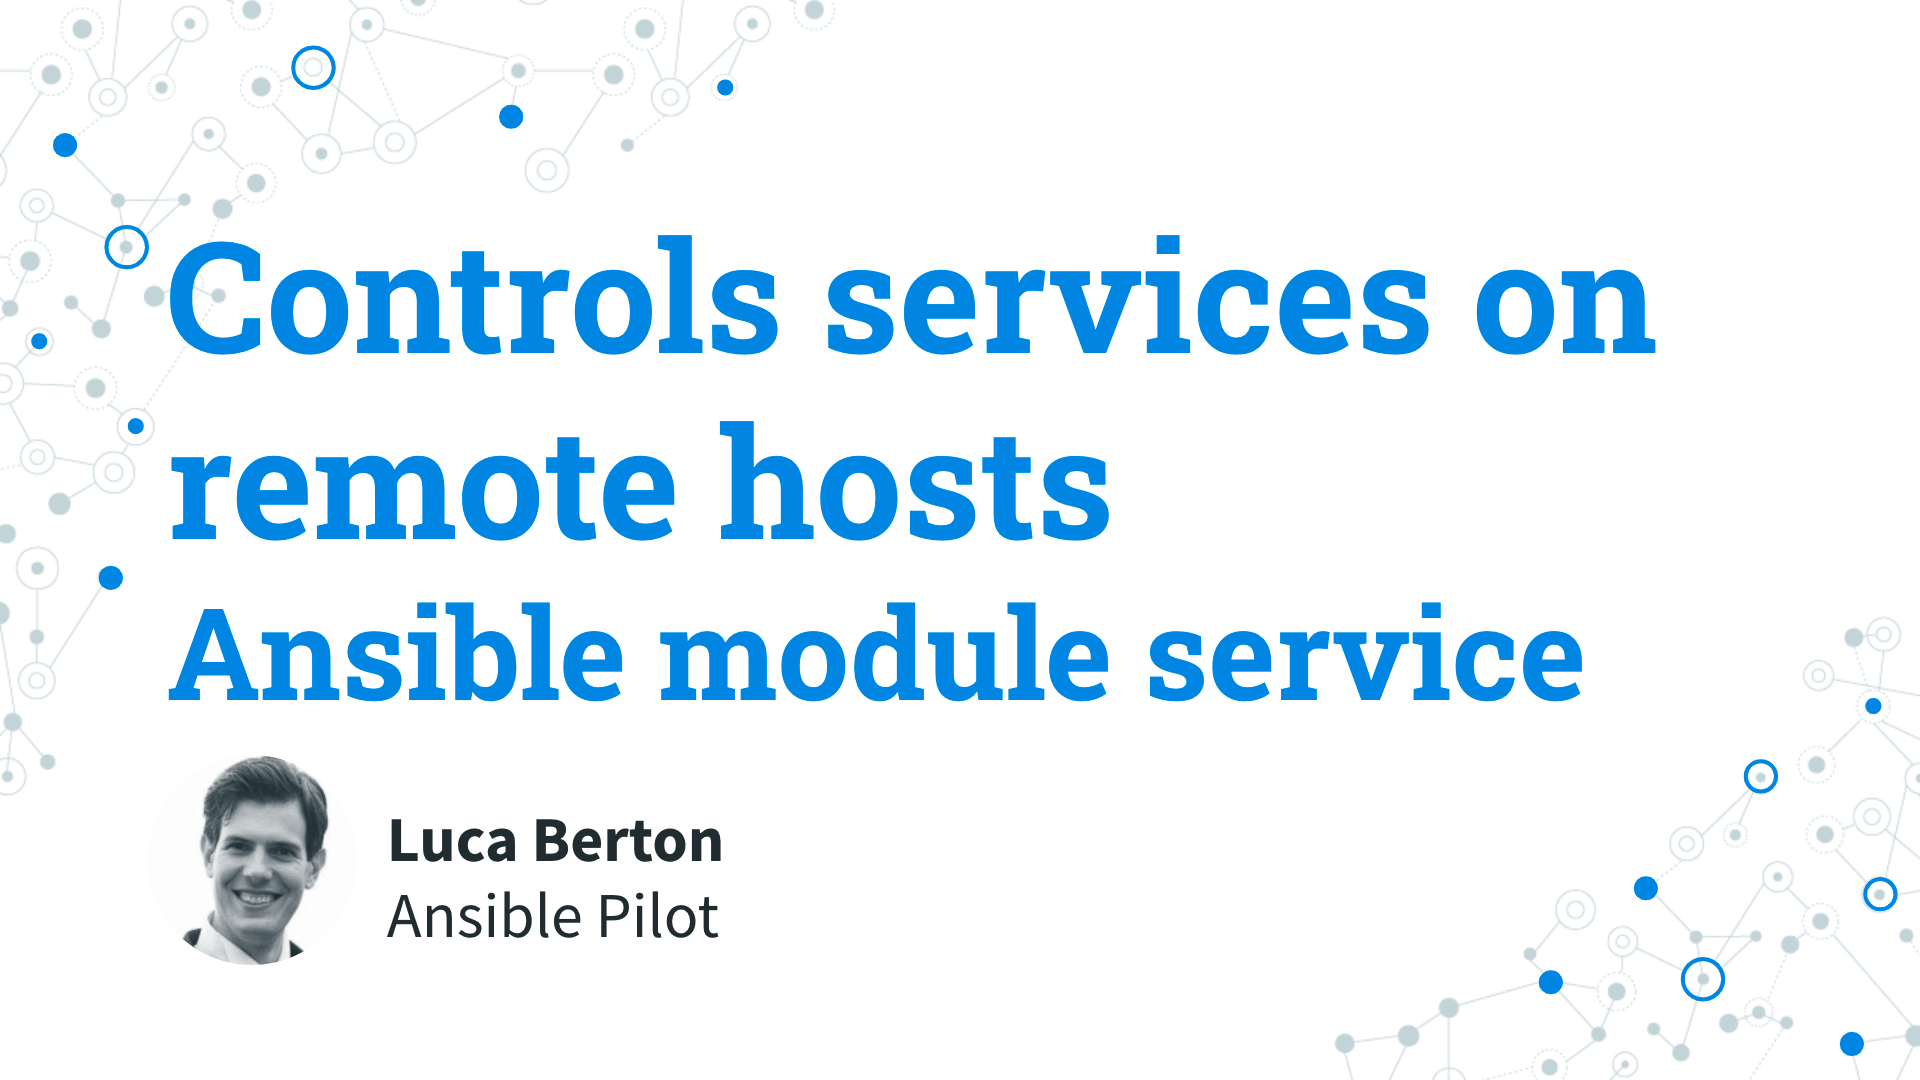 Restart services on remote hosts - Ansible module service